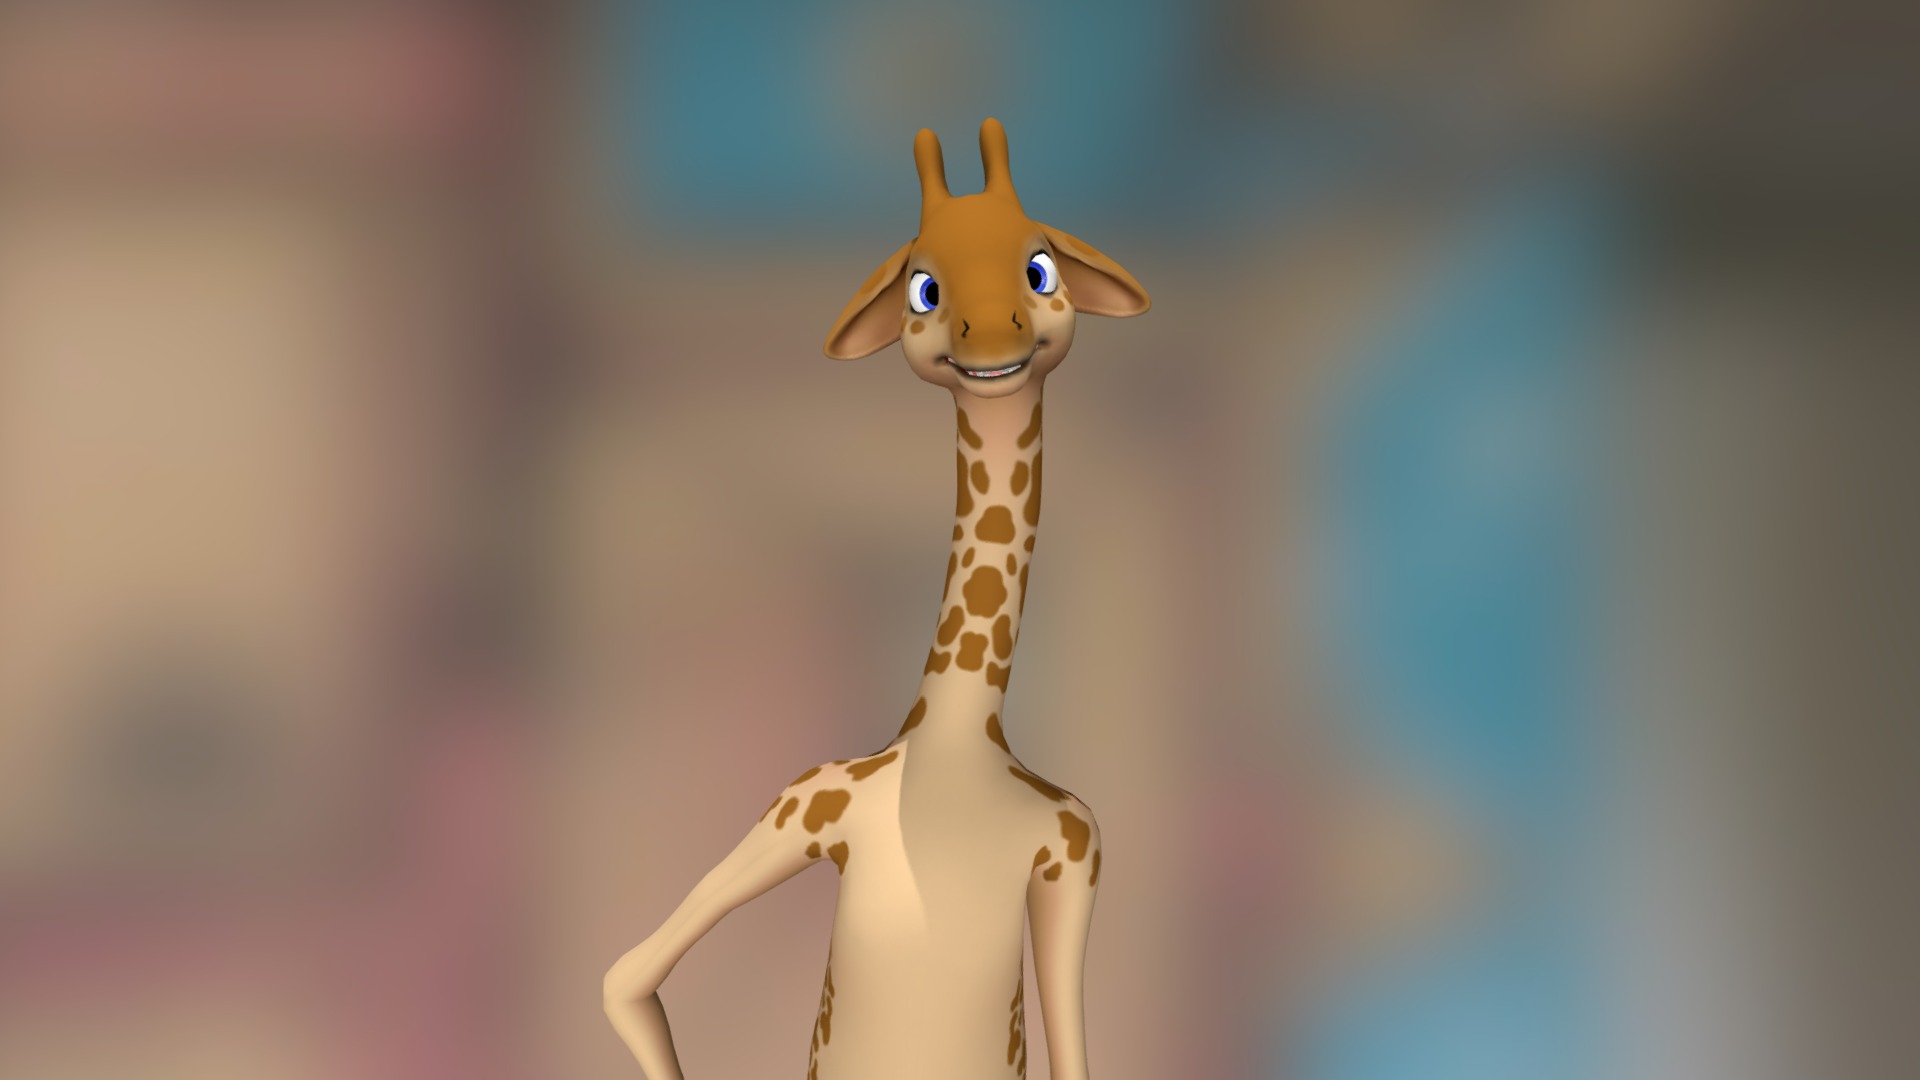 3D model Necky the giraffe - This is a 3D model of the Necky the giraffe. The 3D model is about a toy giraffe with a human face.